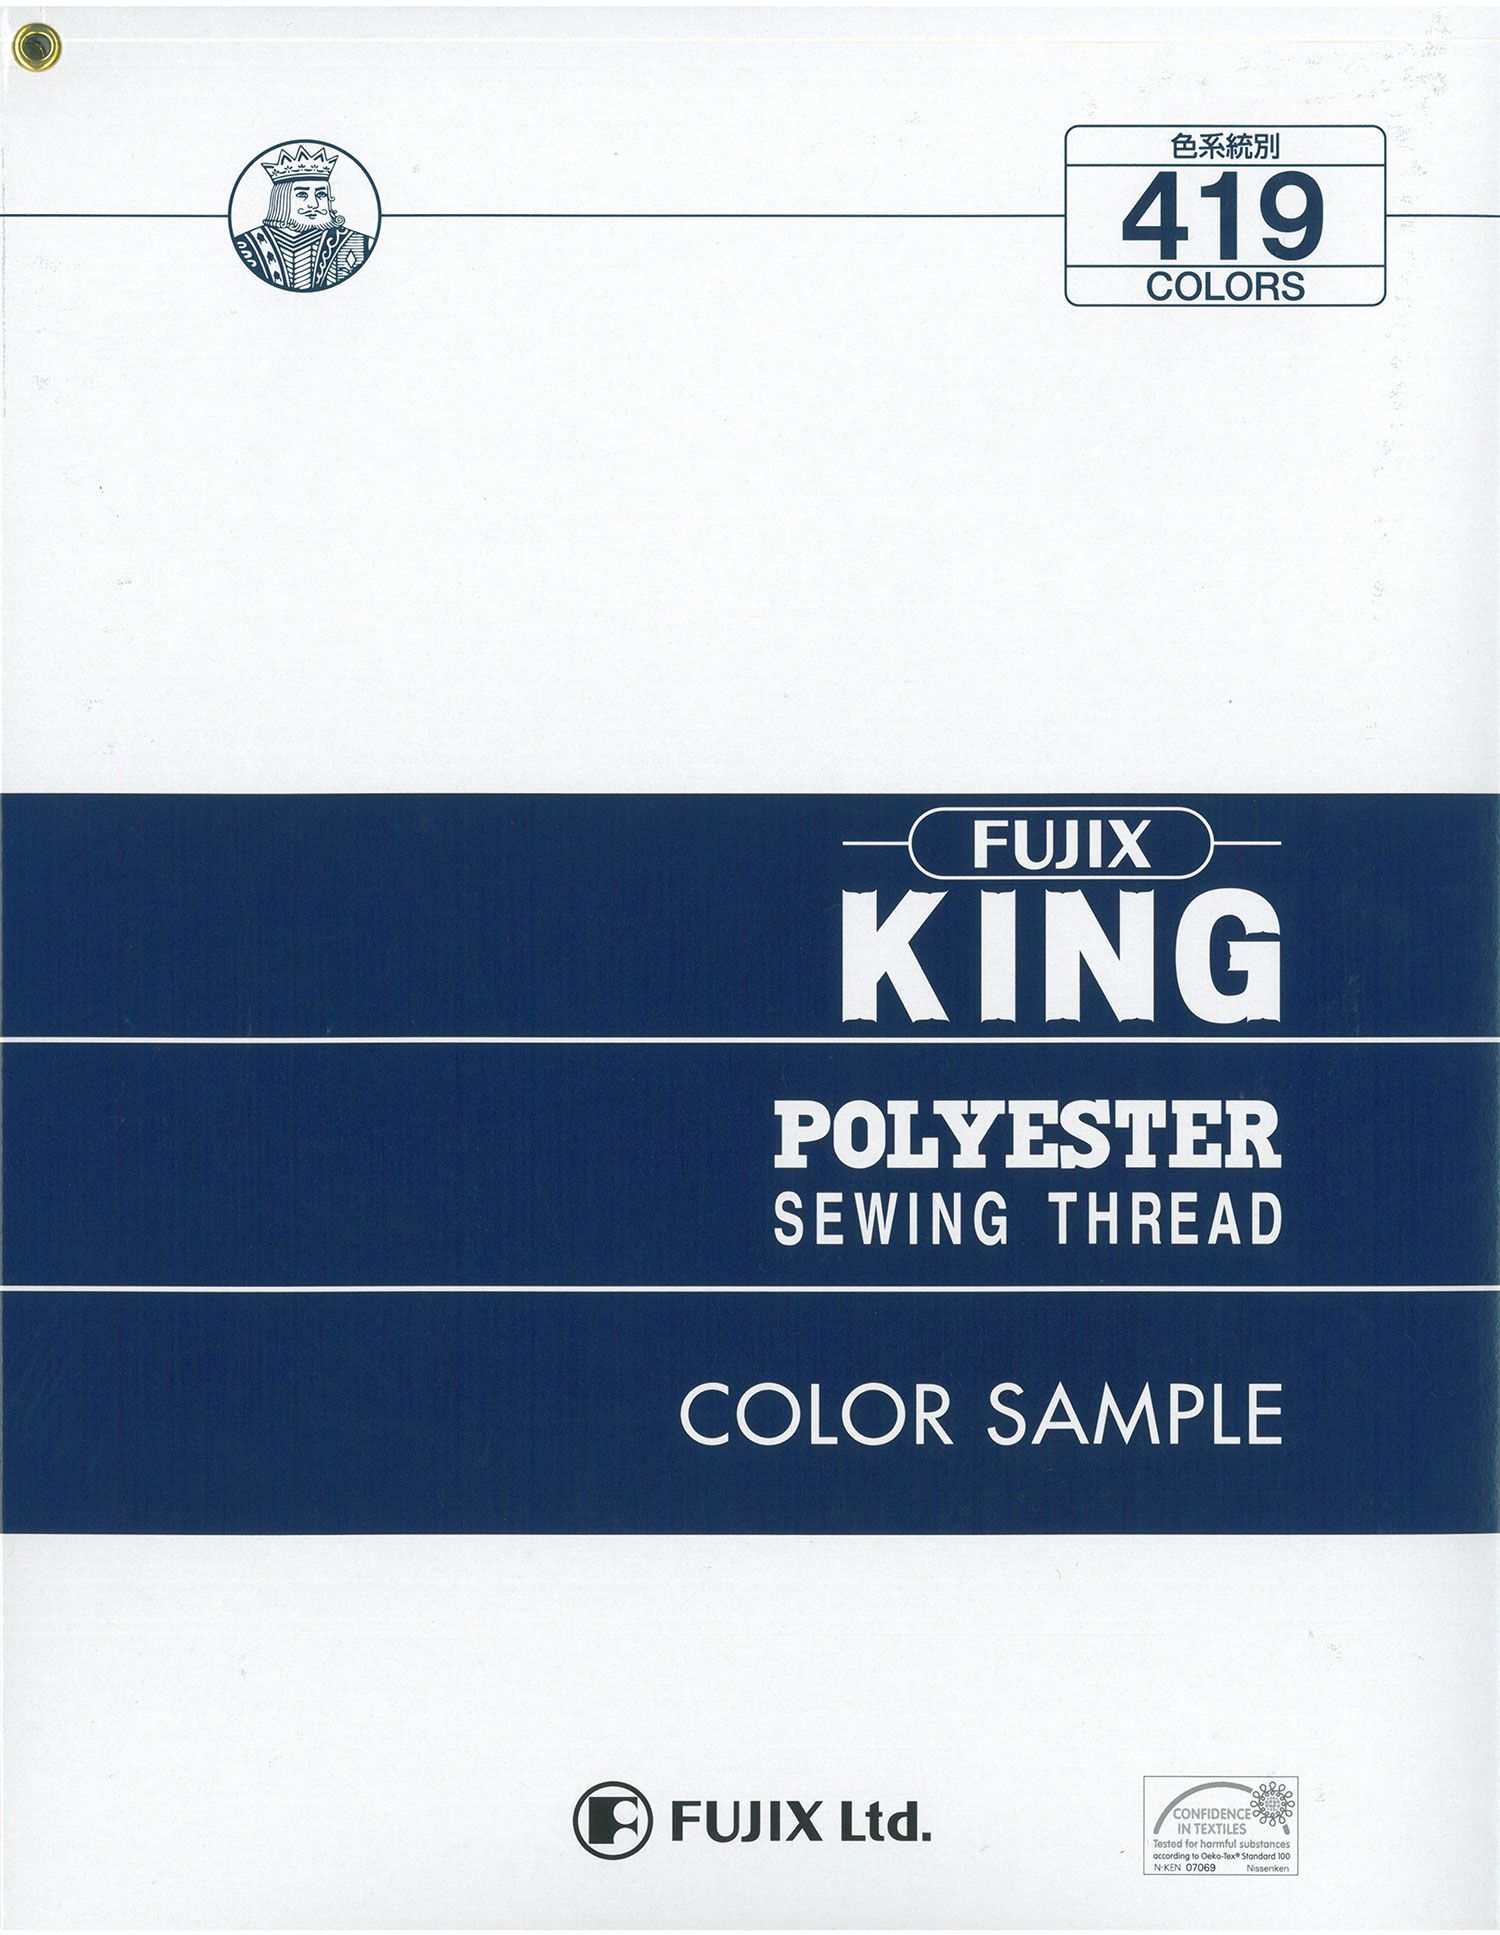 FUJIX-SAMPLE-4 POLYESTER SEWING THREAD[Sample Card] FUJIX